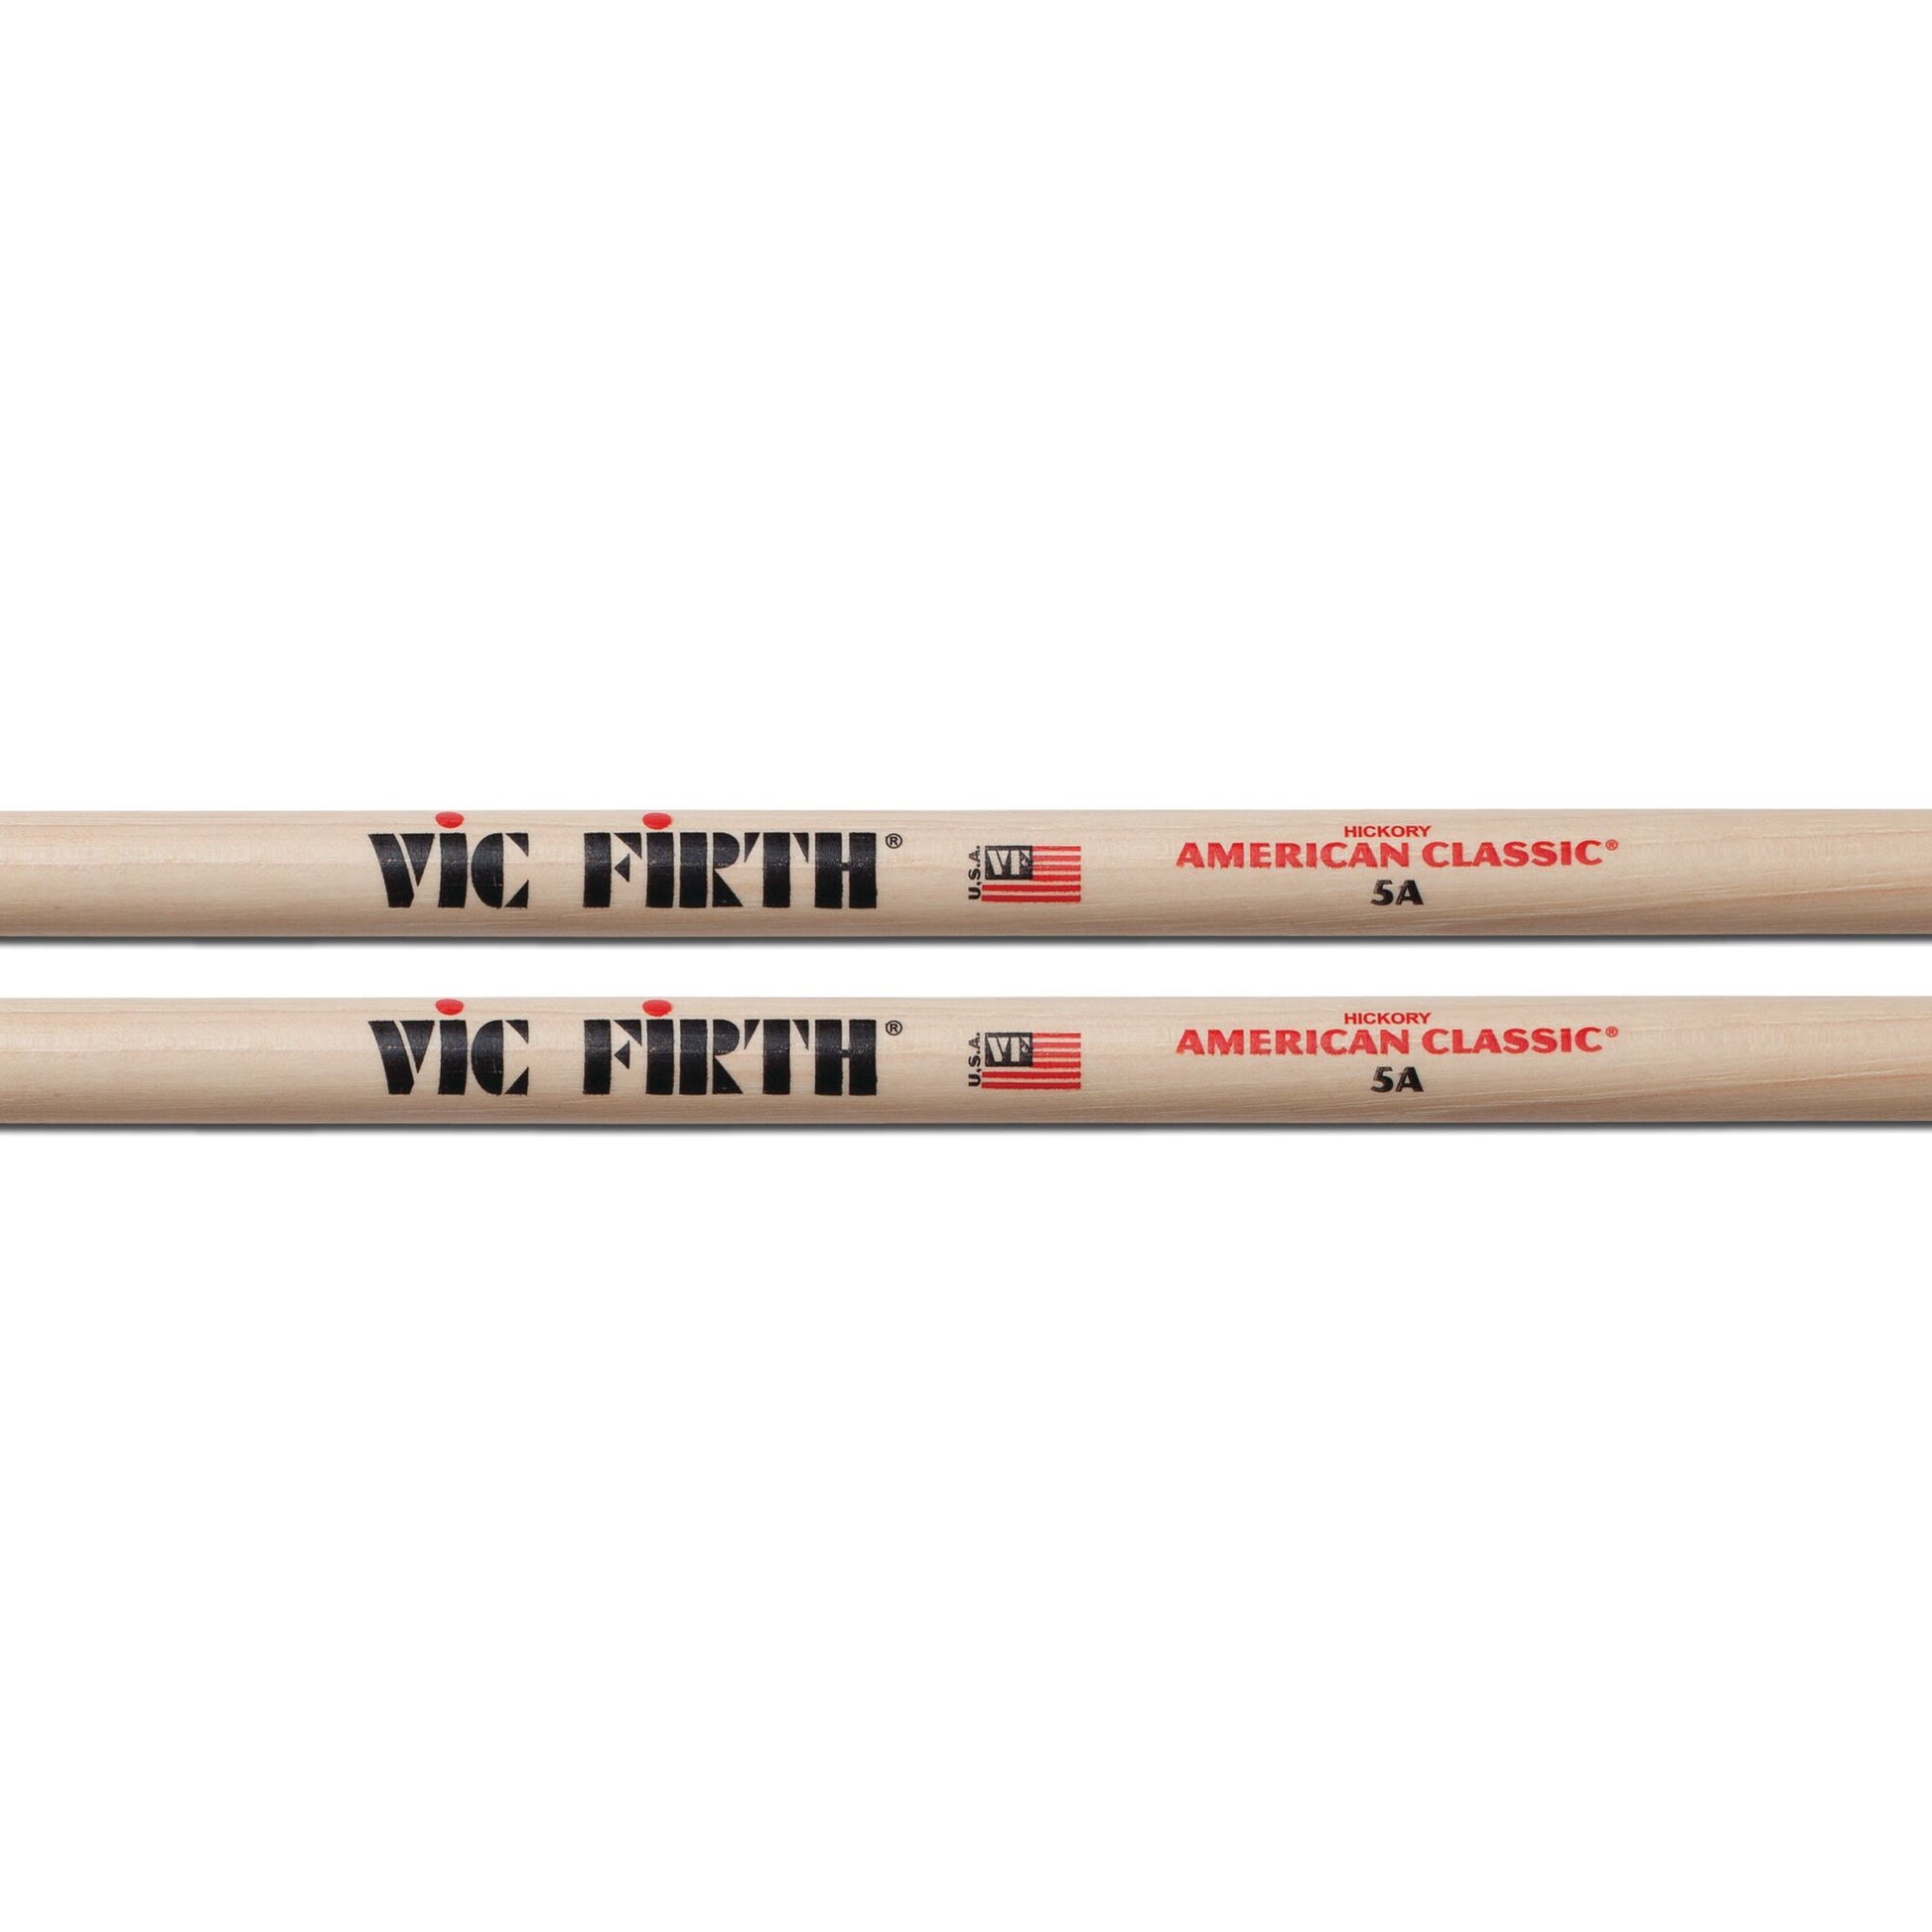 Vic Firth American Classic Pink 5A Wood Tip Drum Sticks (6 Pair Bundle)